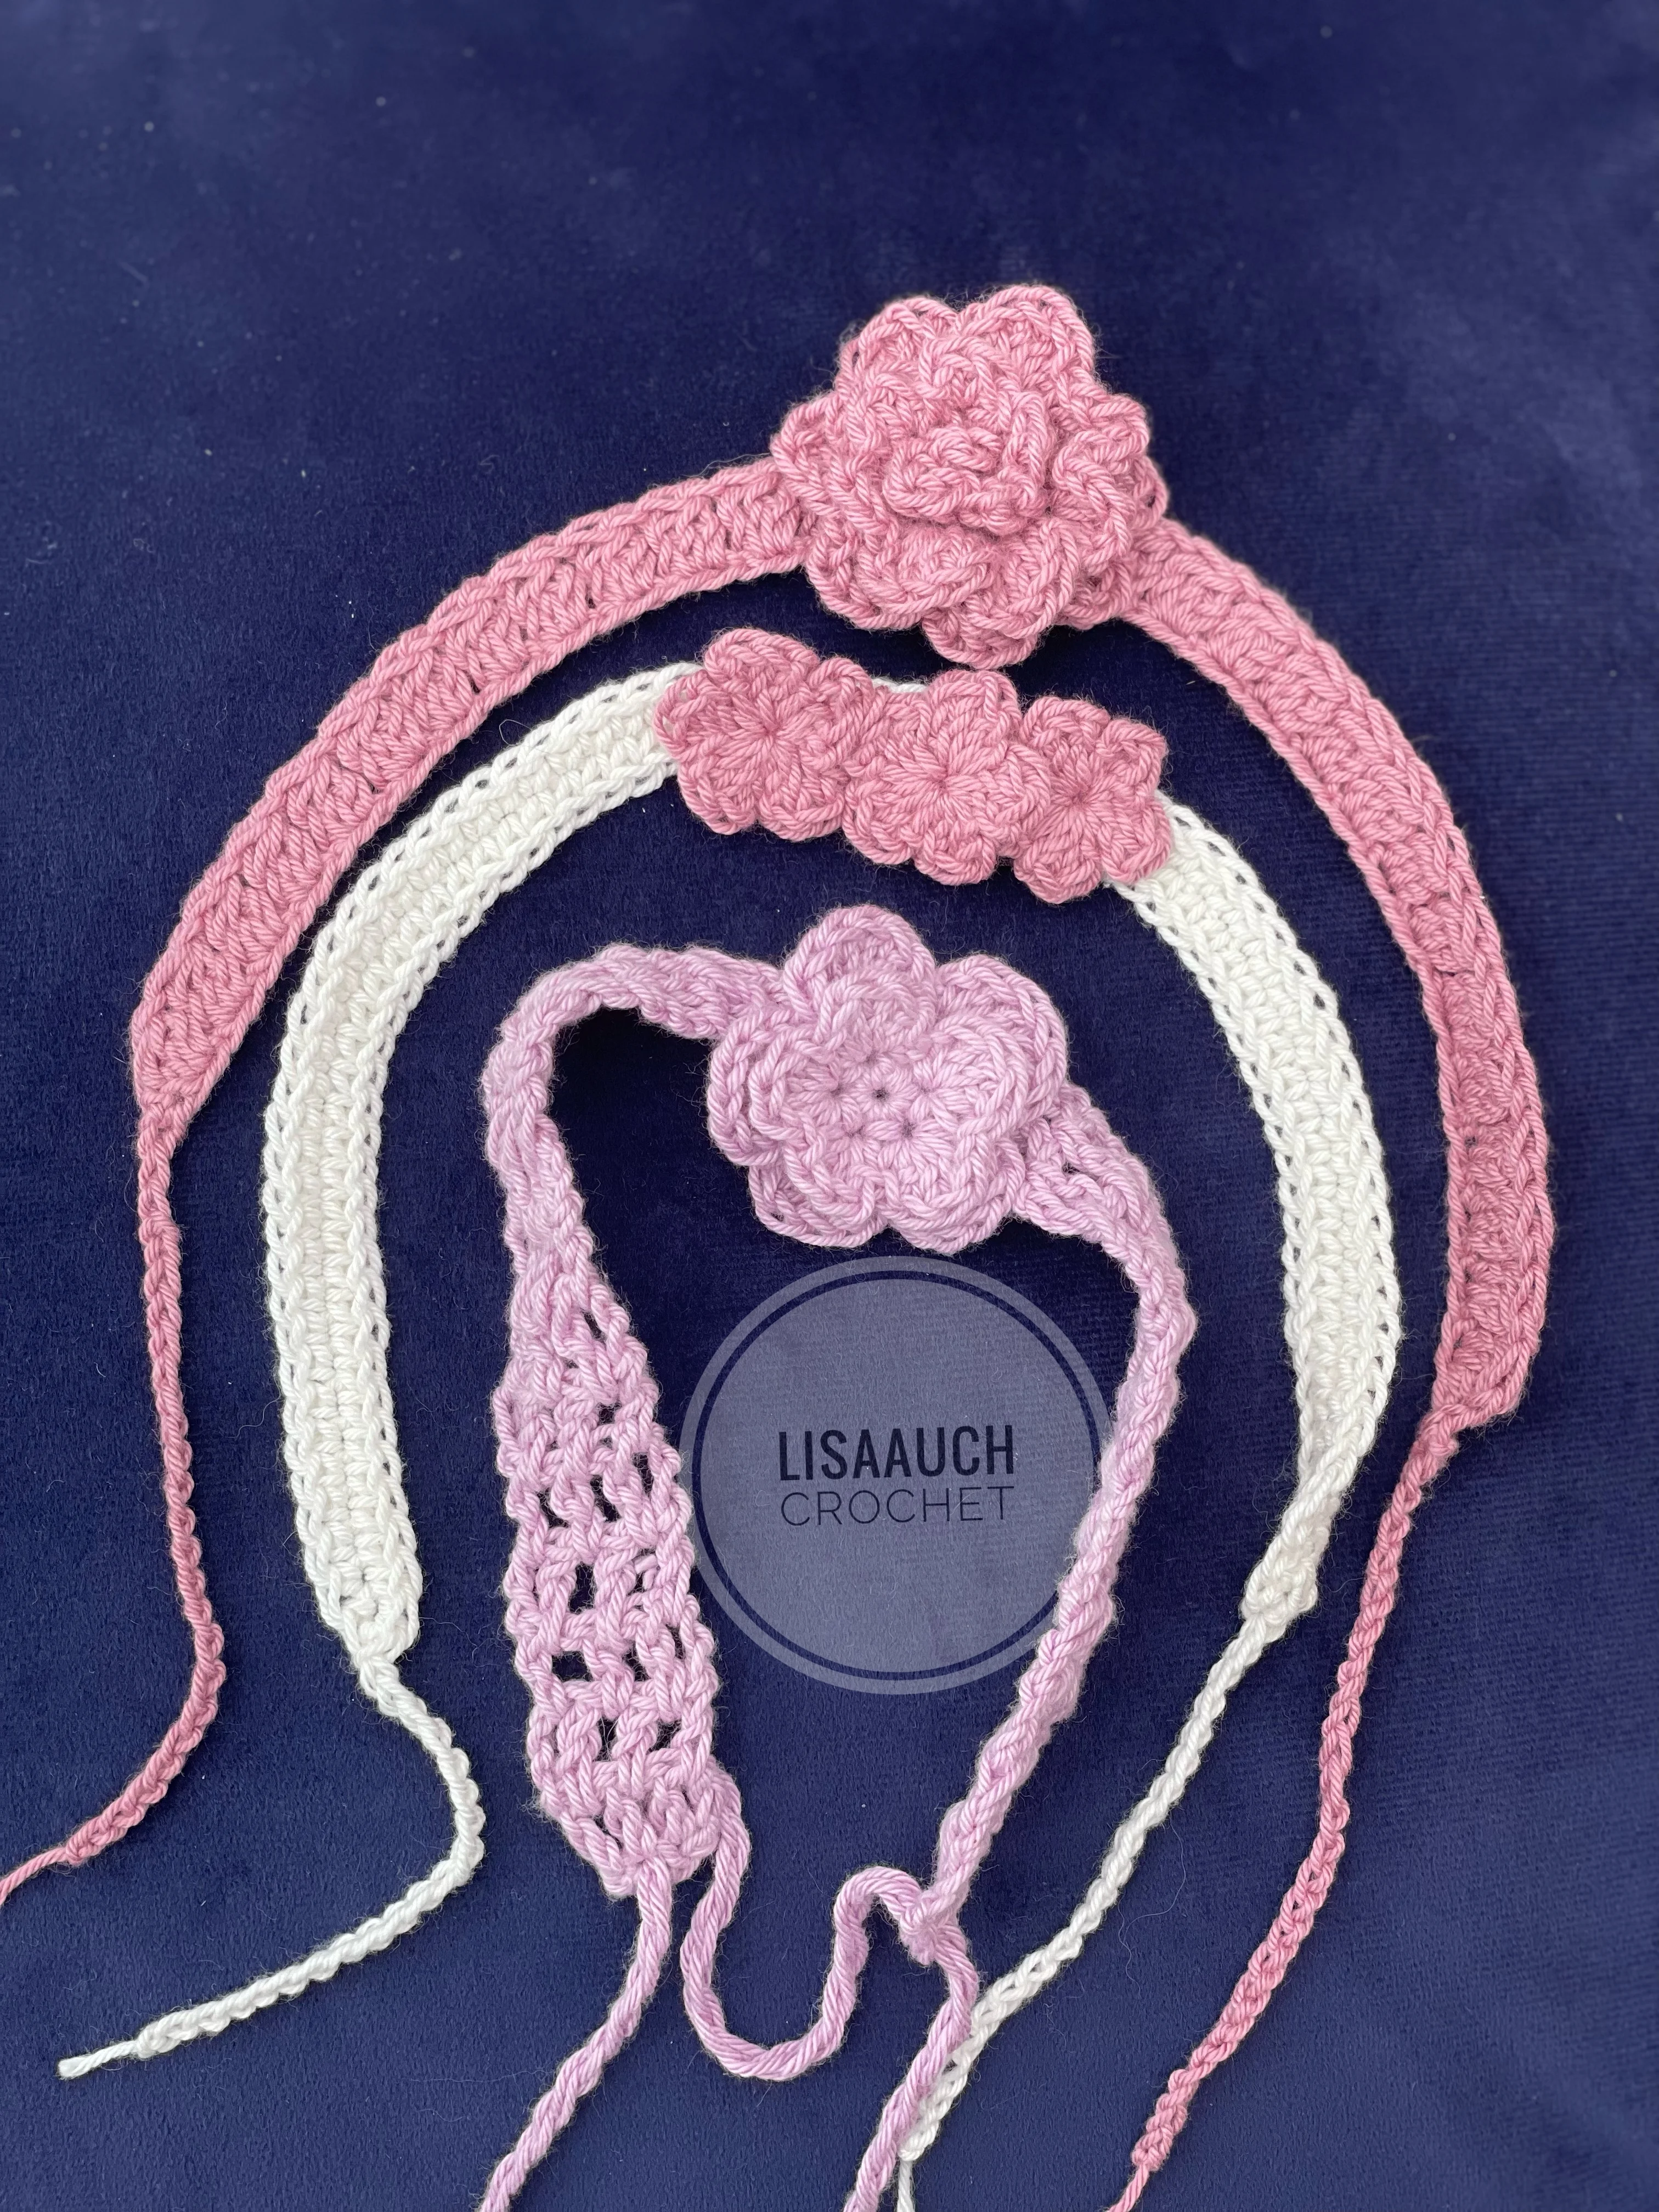 lacy crochet baby headbands with crochet flowers